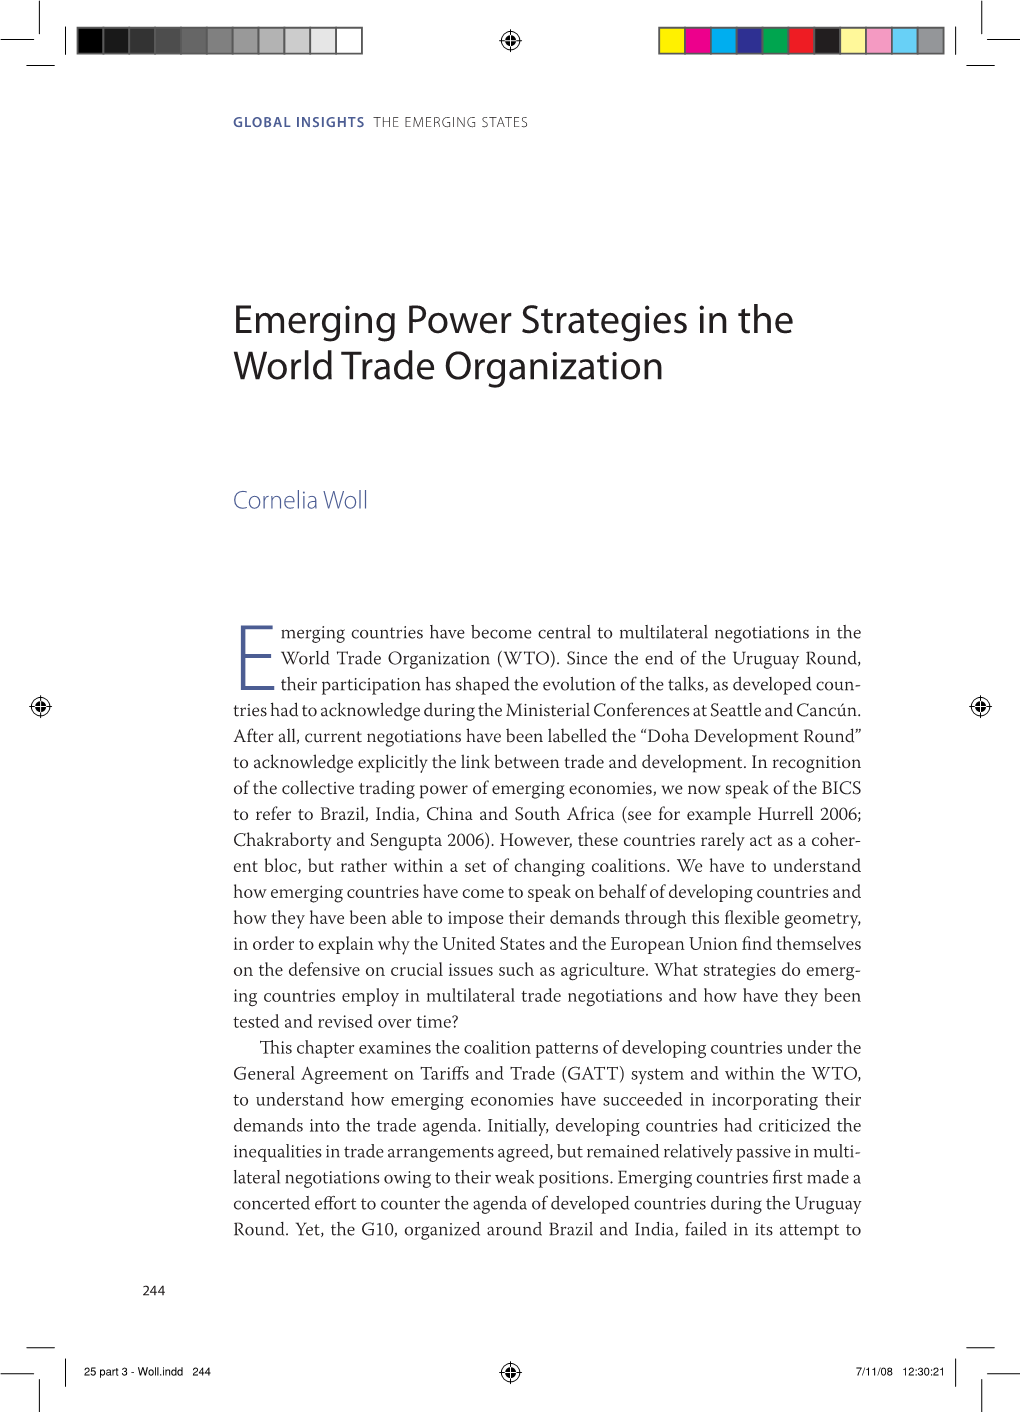 Emerging Power Strategies in the World Trade Organization